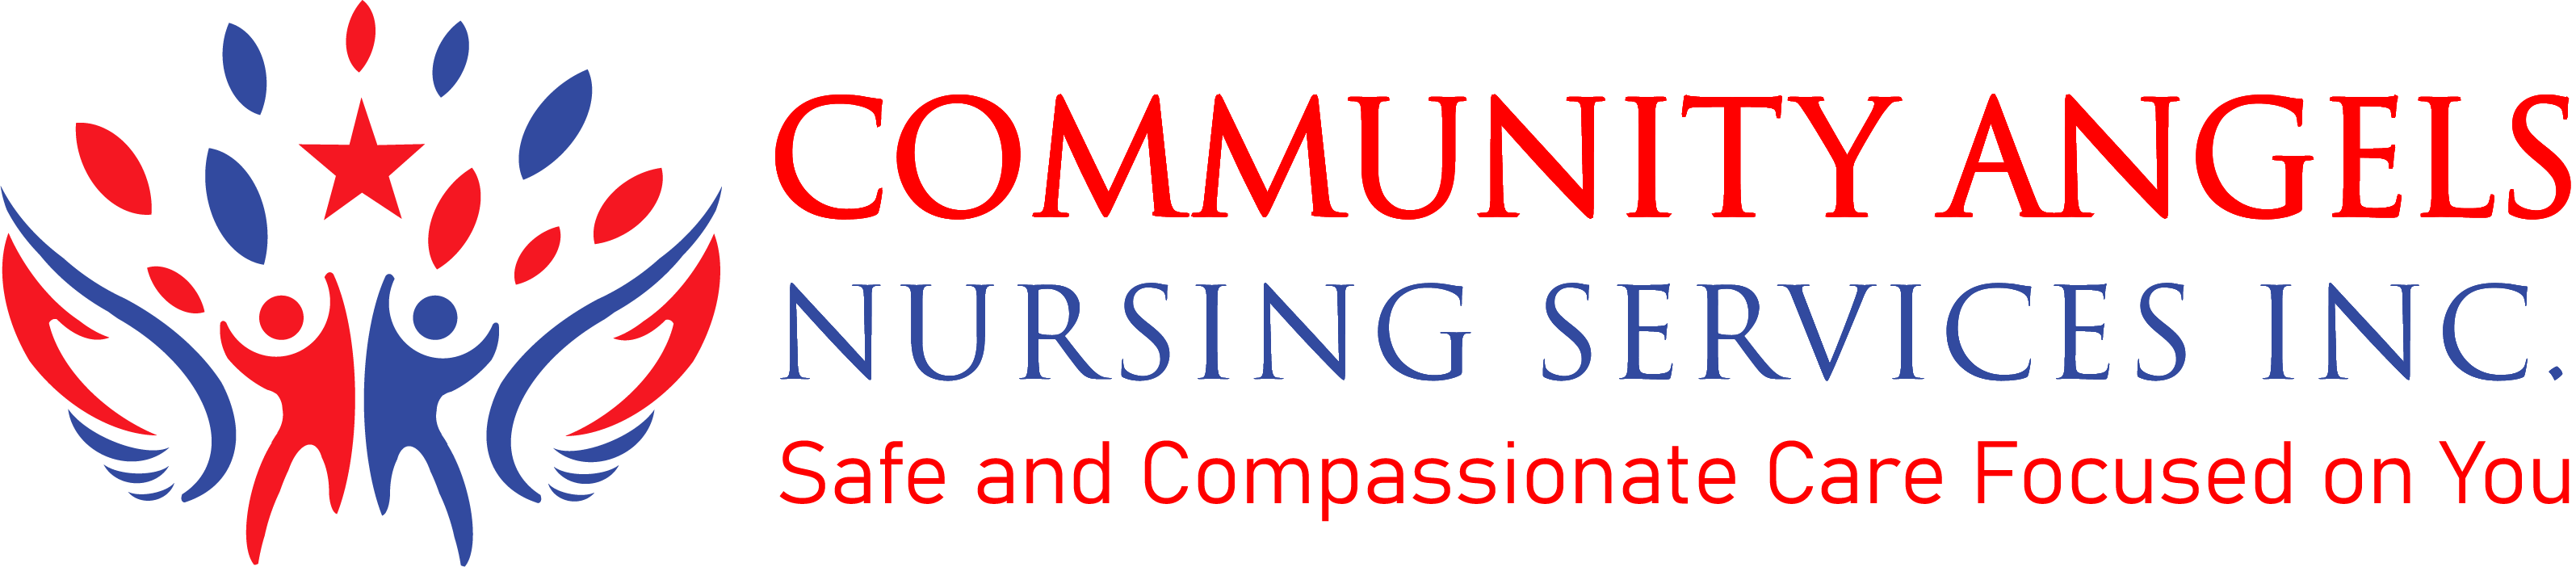 Community Angels Nursing Services Inc.